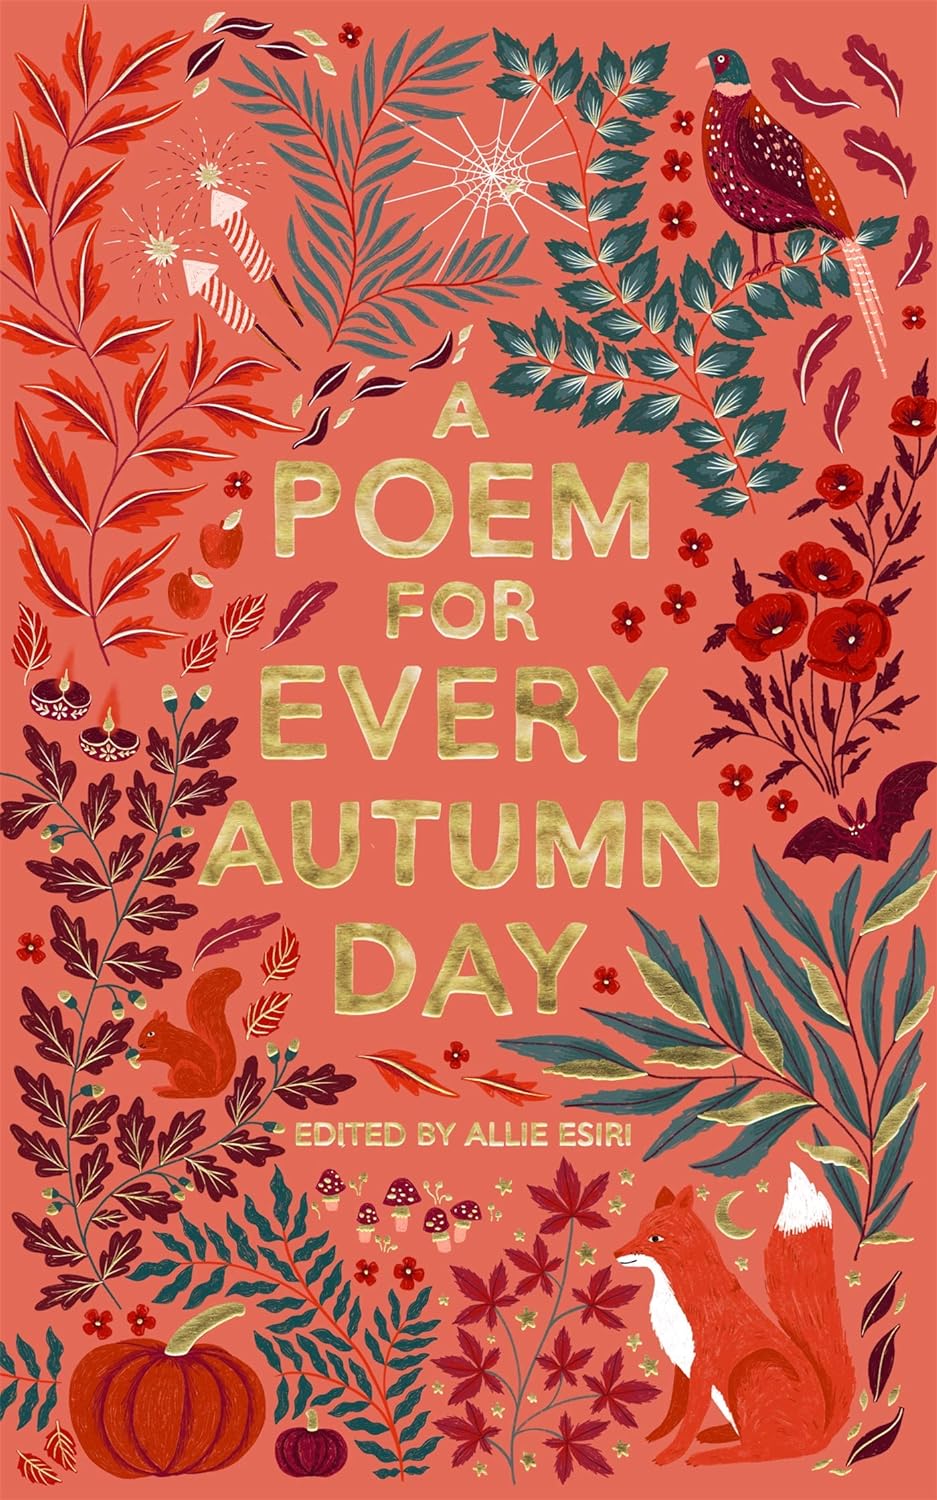 read inspiring poems (through all the seasons)